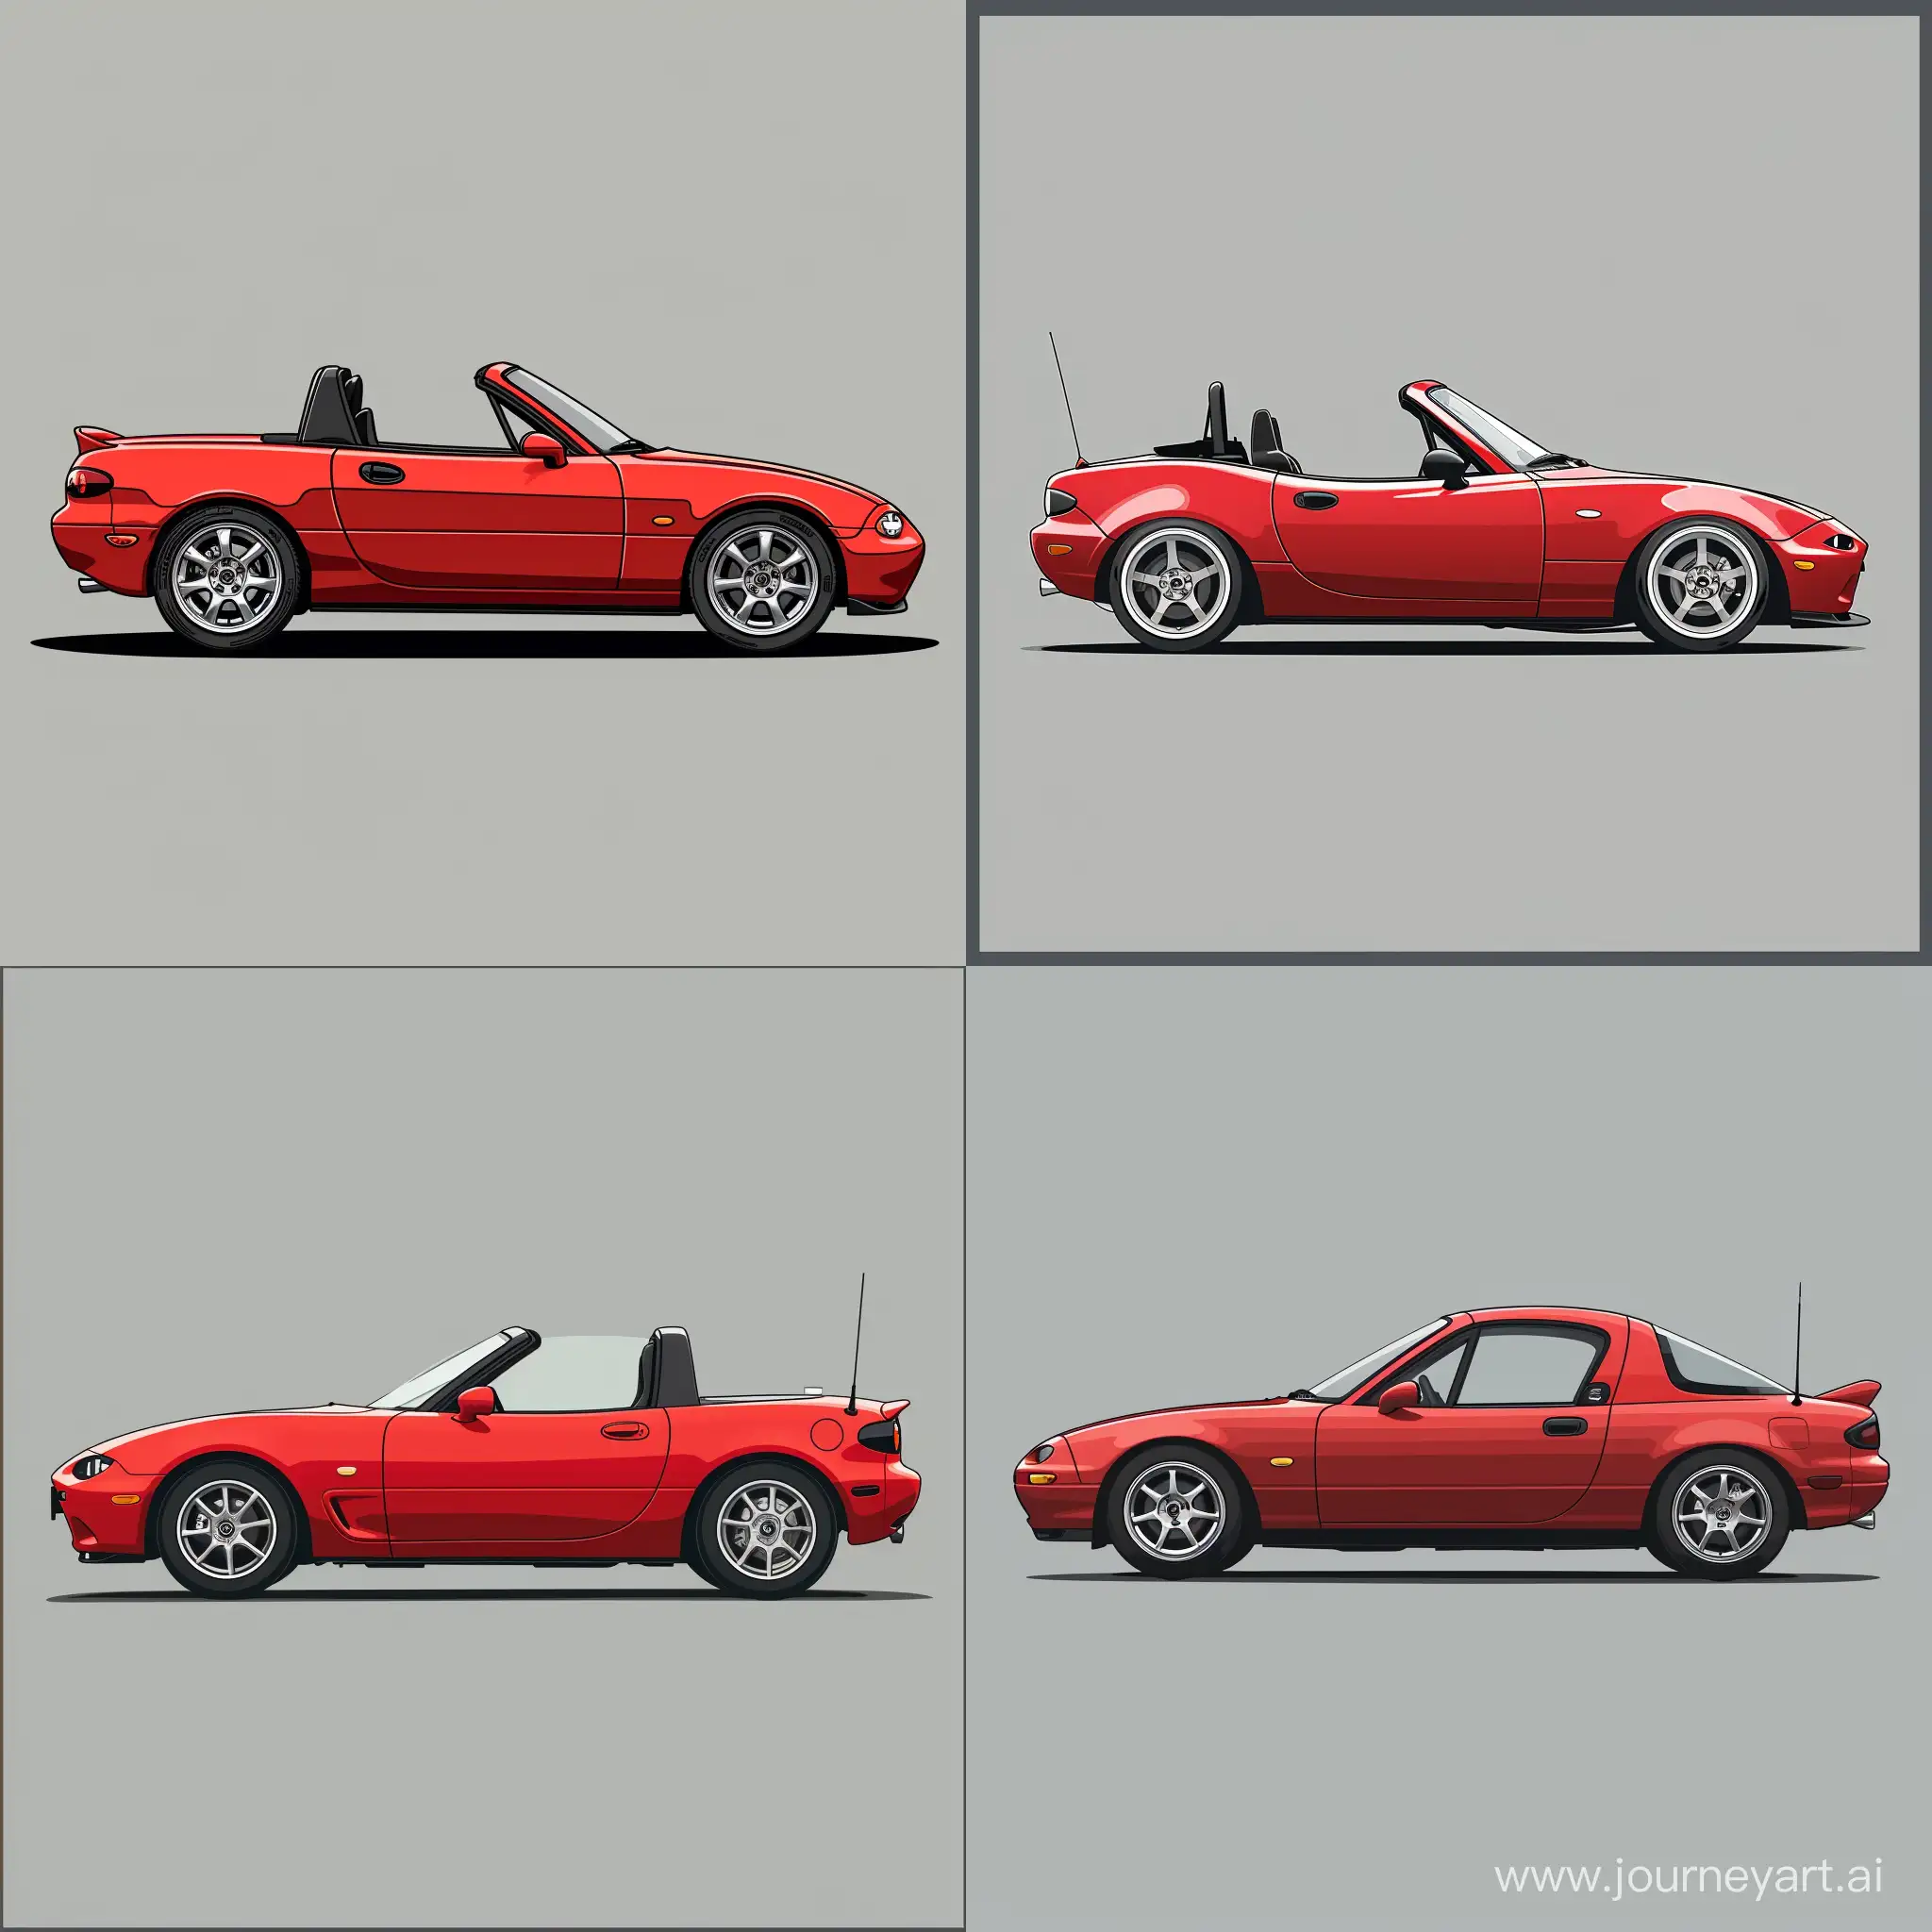 Red-Mazda-Miata-2D-Car-Illustration-on-Simple-Gray-Background